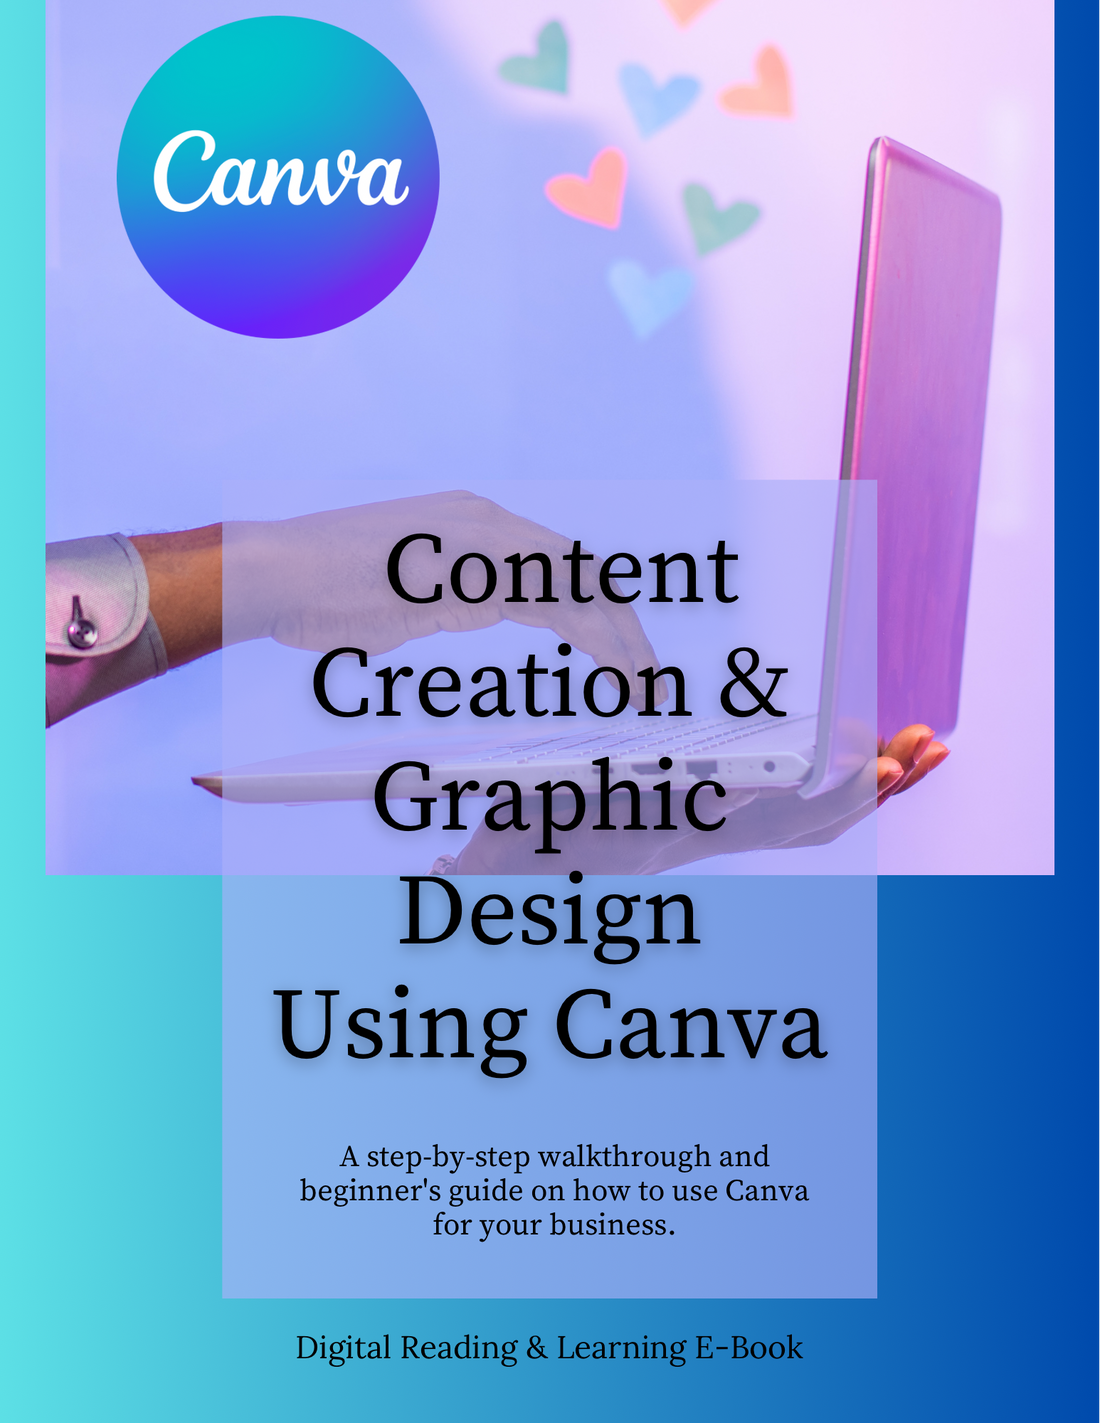 *Digital E-Book* | A Basic 101 Training on How To Use “CANVA”